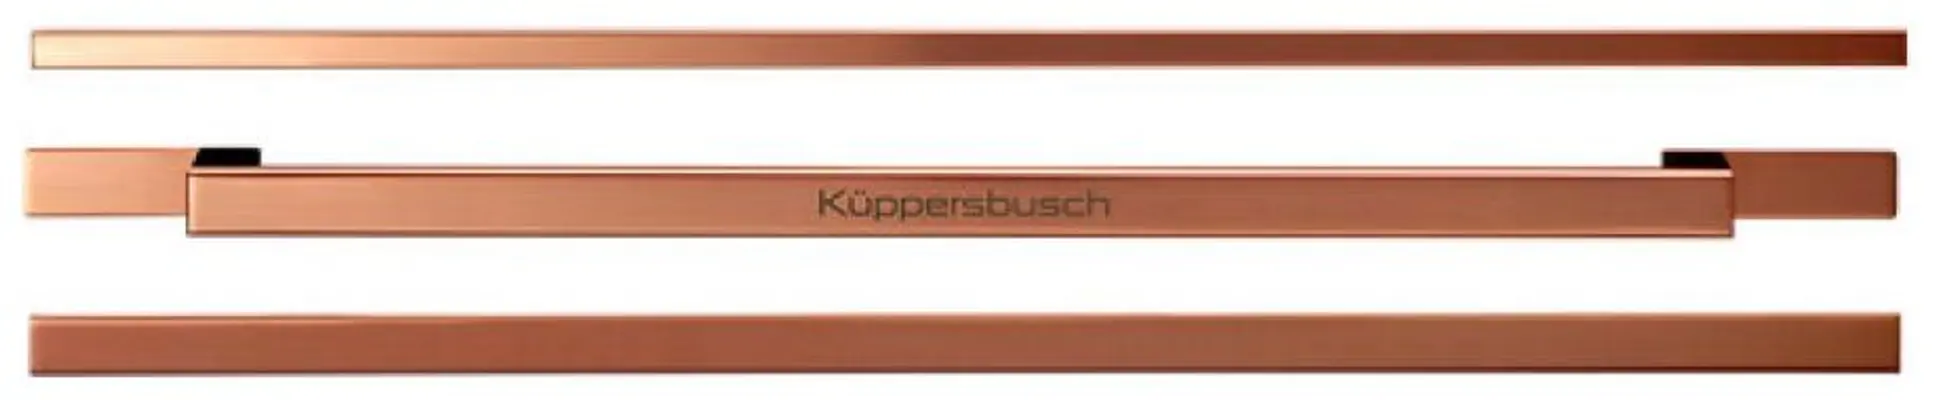 DK7003-Kuppersbusch-Koel-vries-accessoires